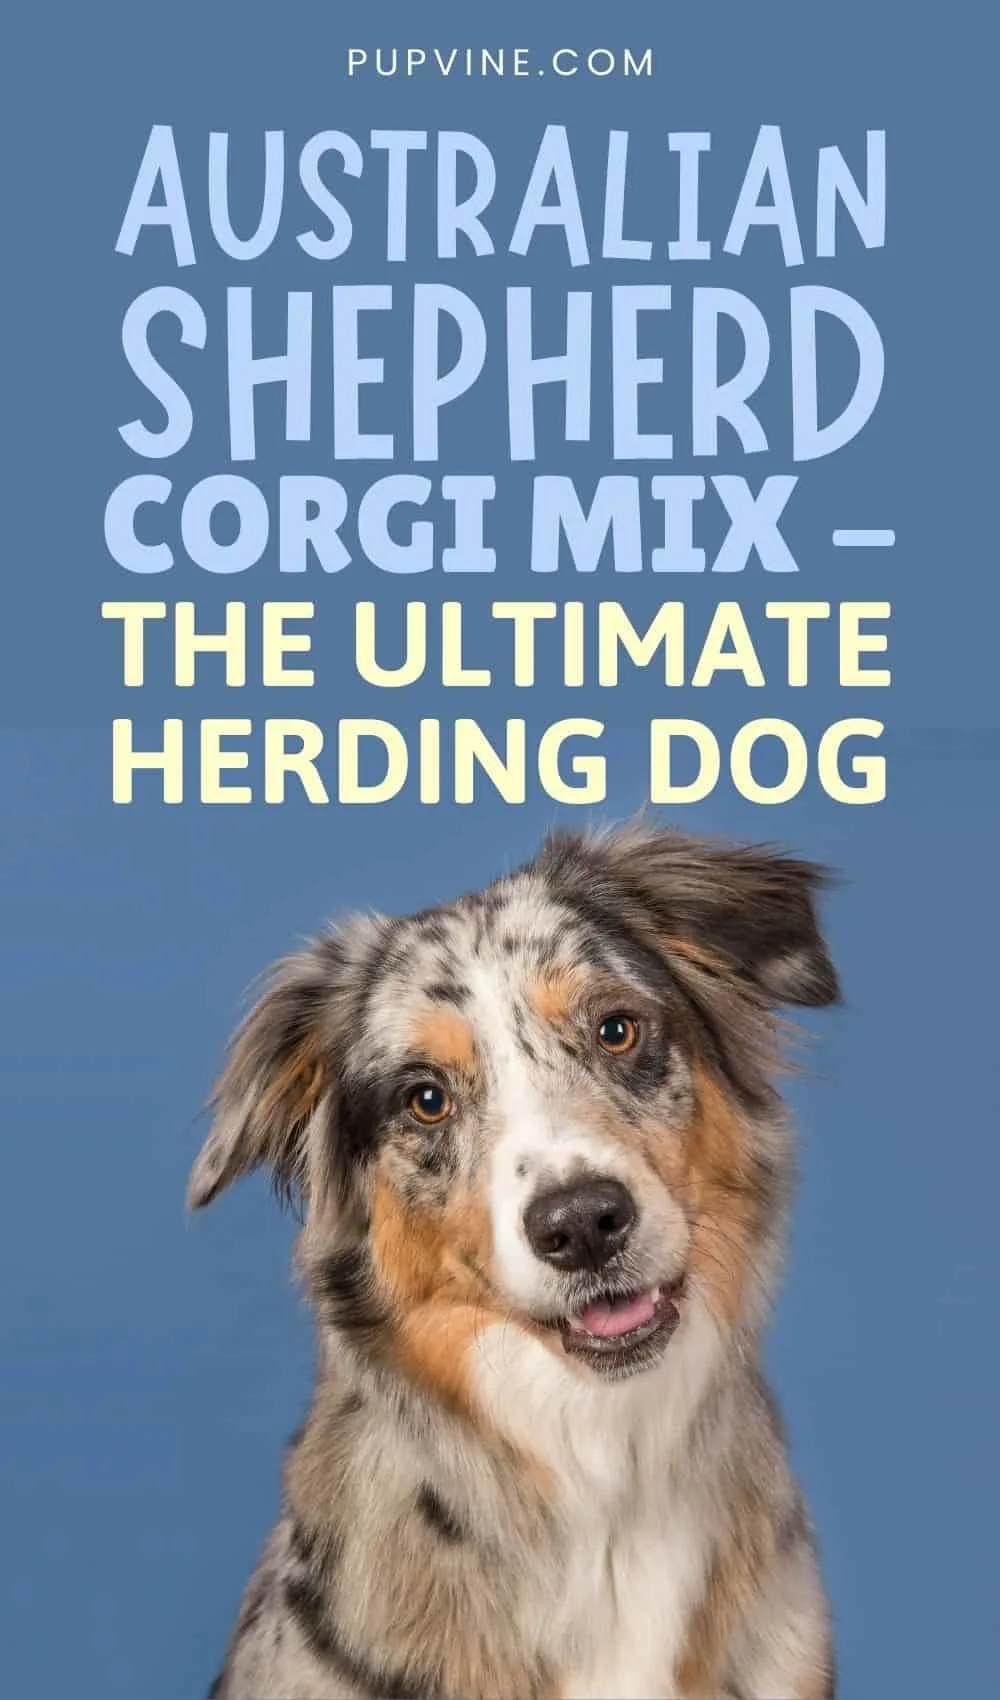 Australian Shepherd Corgi Mix - The Ultimate Herding Dog